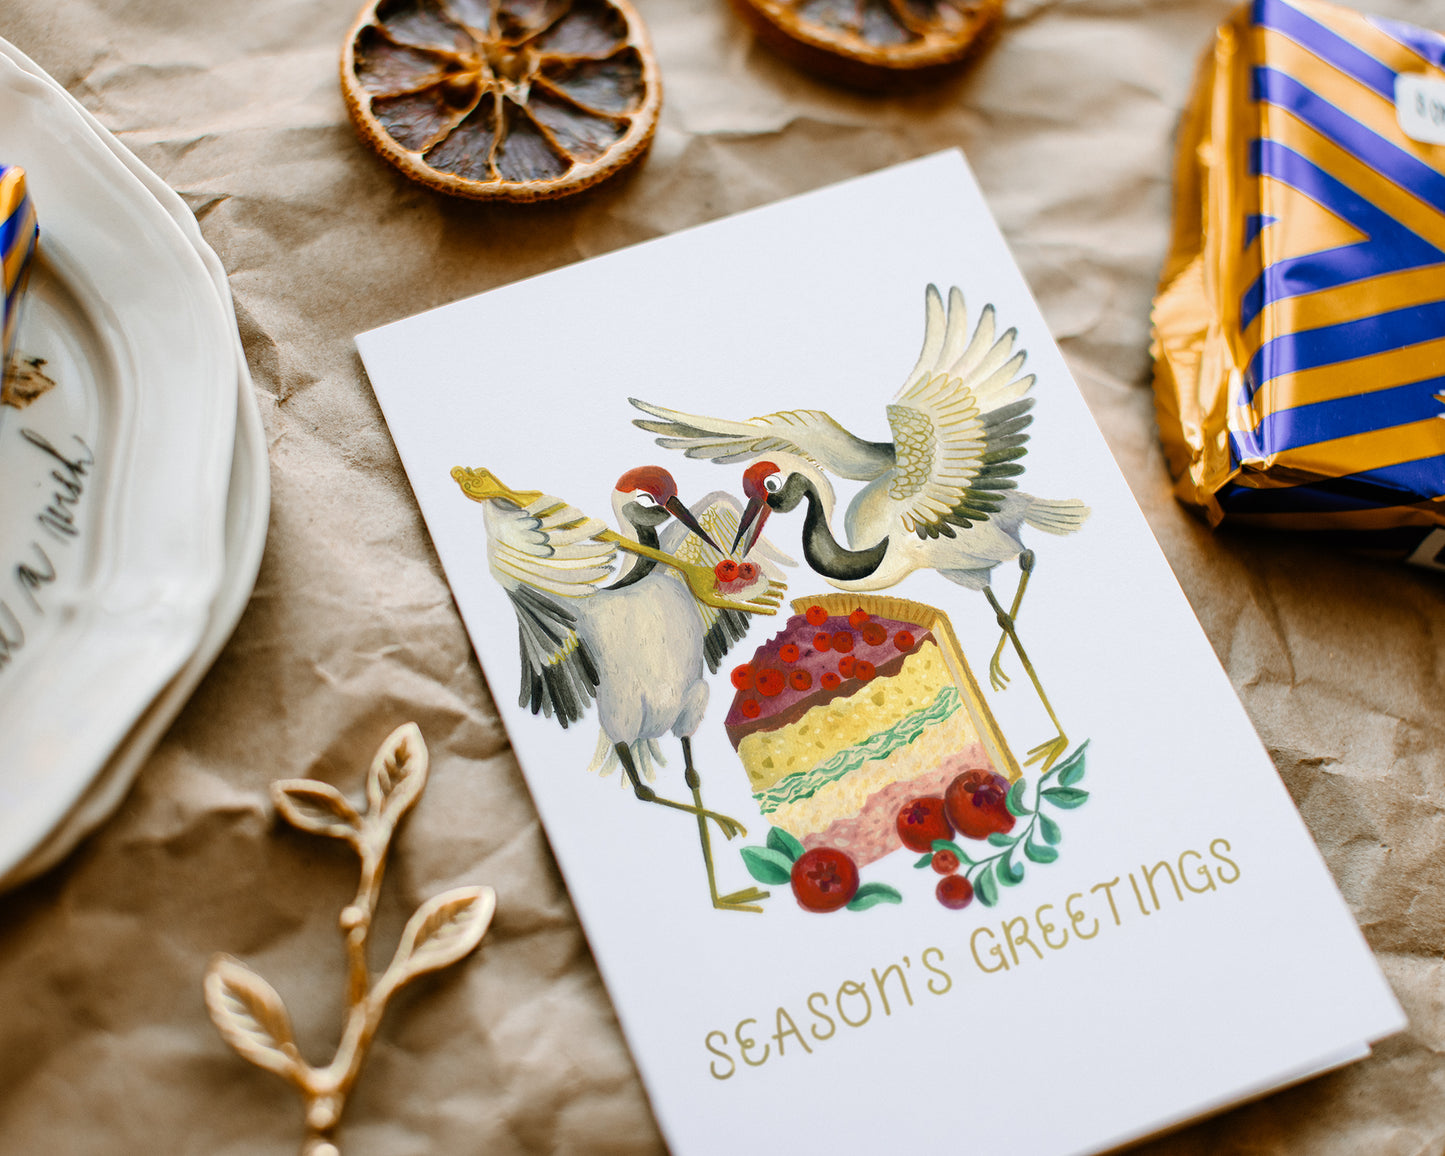 cranberry cranes | Holiday Card + Envelope